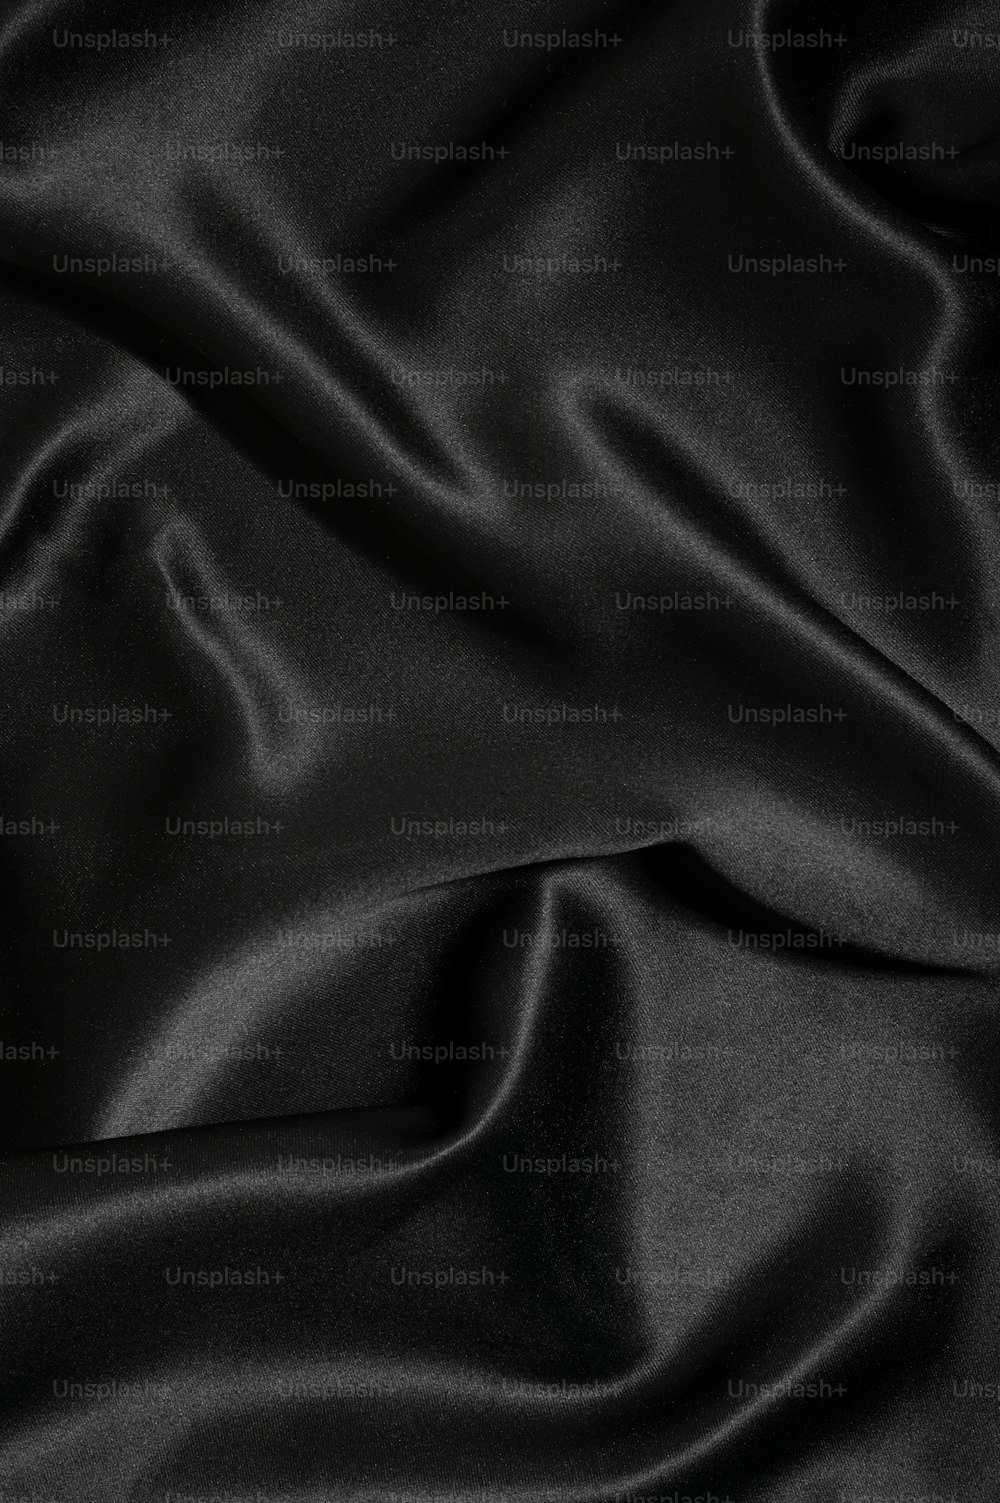 Un primer plano de una tela de satén negro